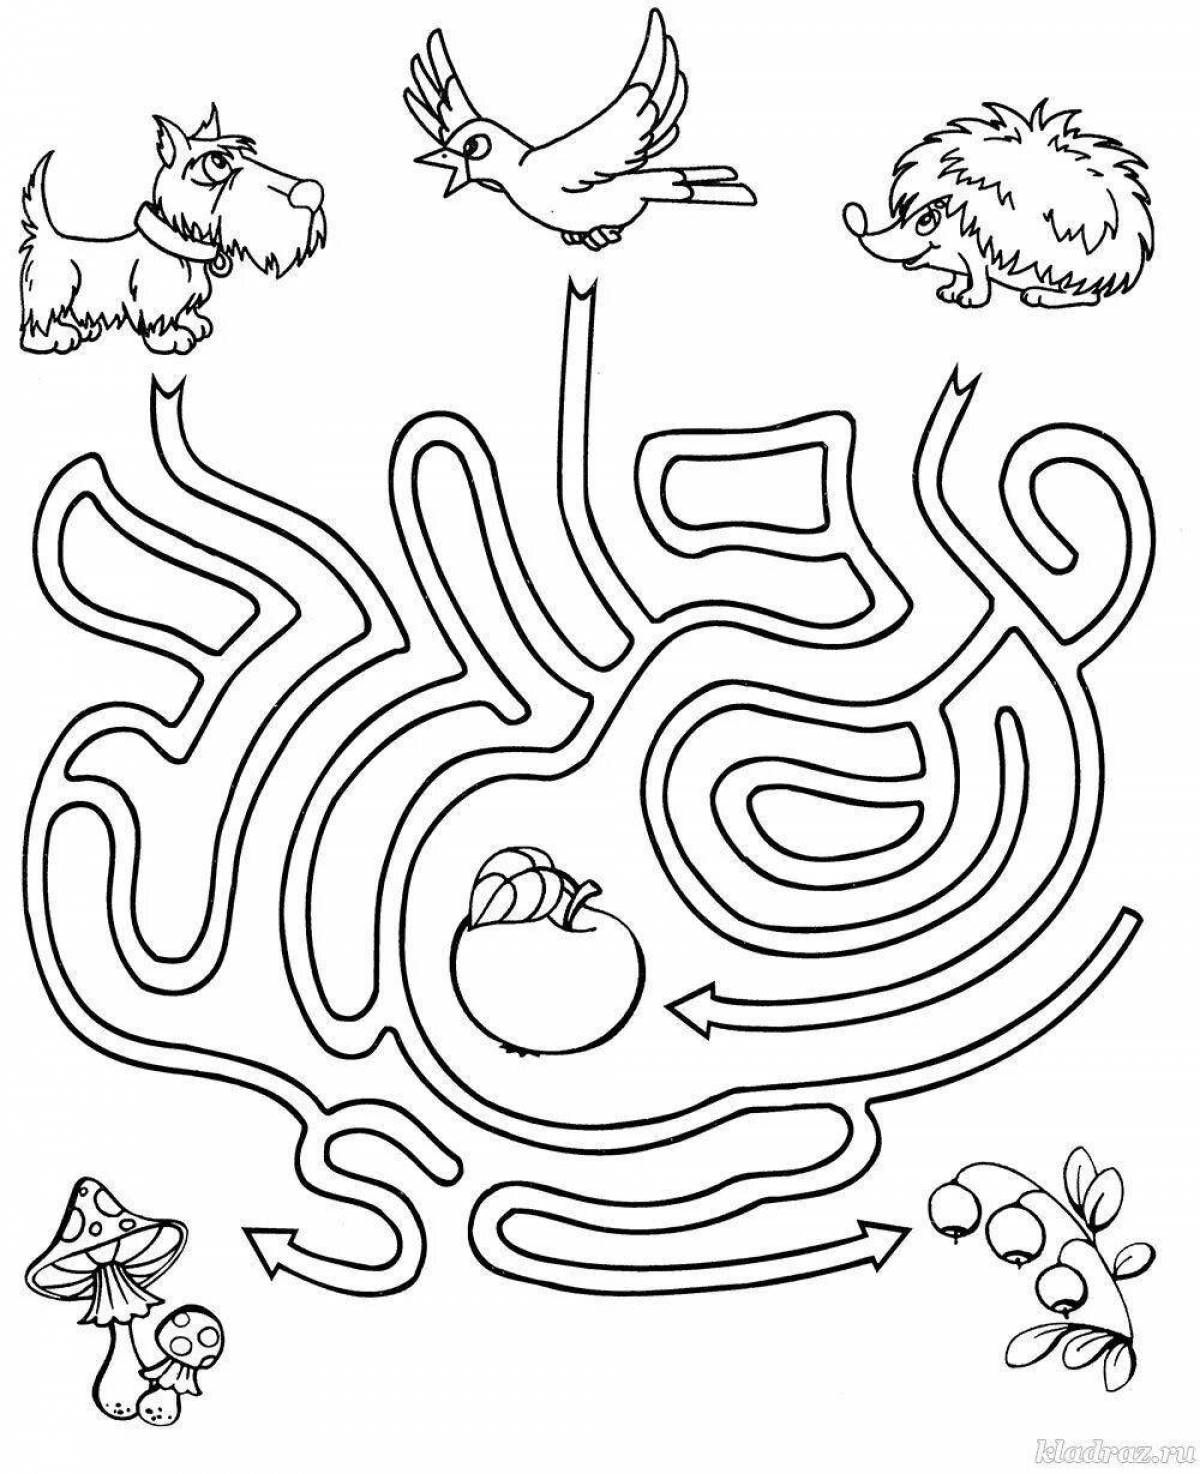 Maze for kids #7